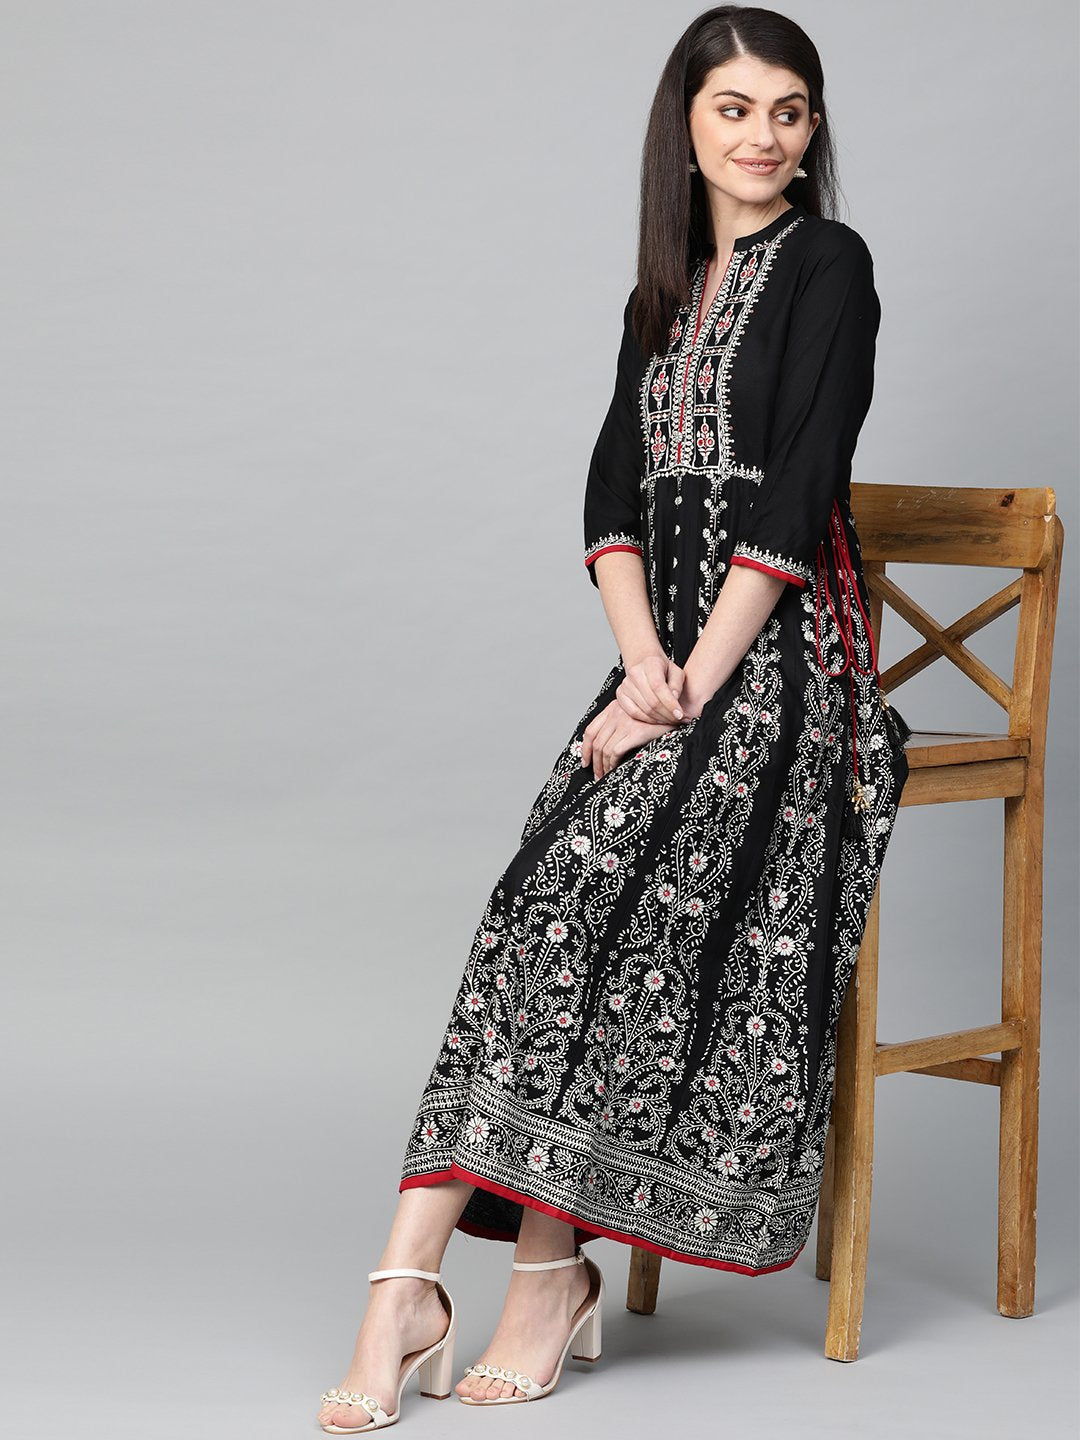 Ishin Women's Cotton Black Embellished Anarkali Dress